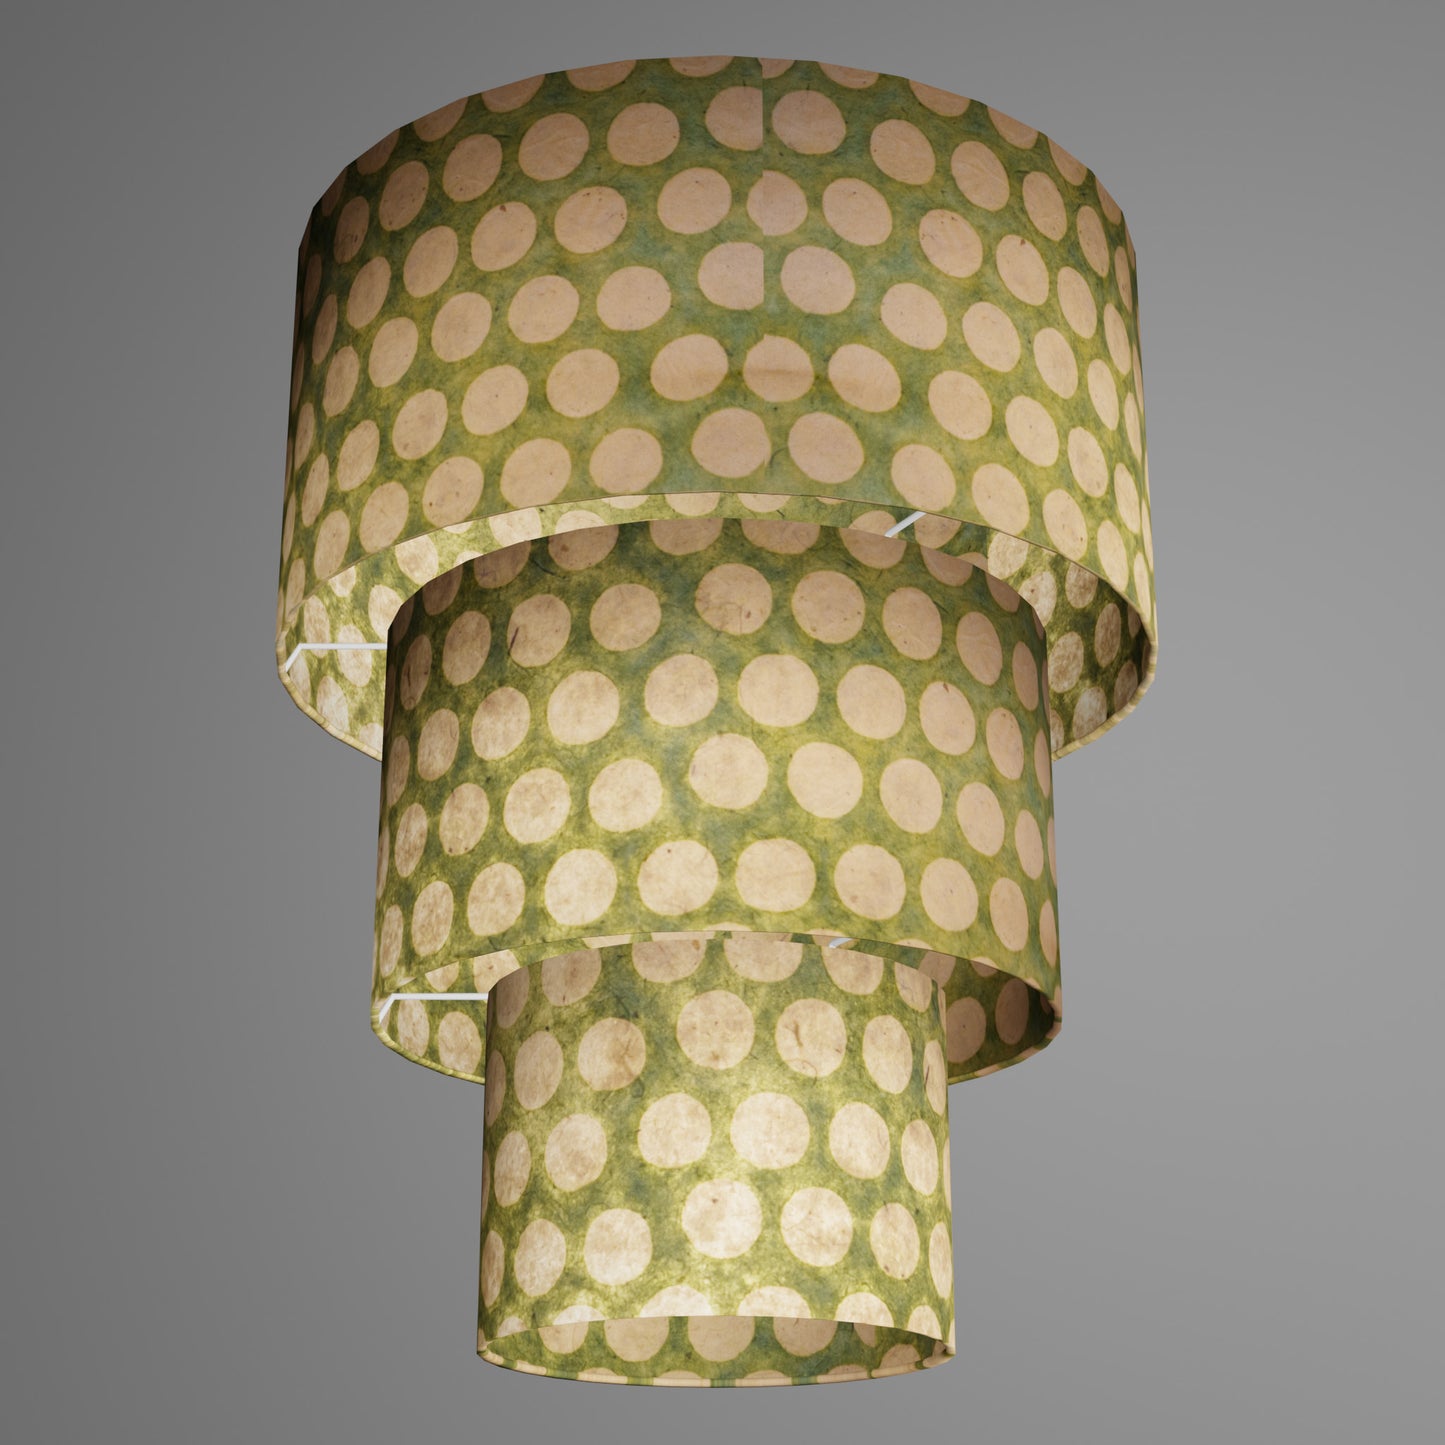 3 Tier Lamp Shade - P87 ~ Batik Dots on Green, 40cm x 20cm, 30cm x 17.5cm & 20cm x 15cm